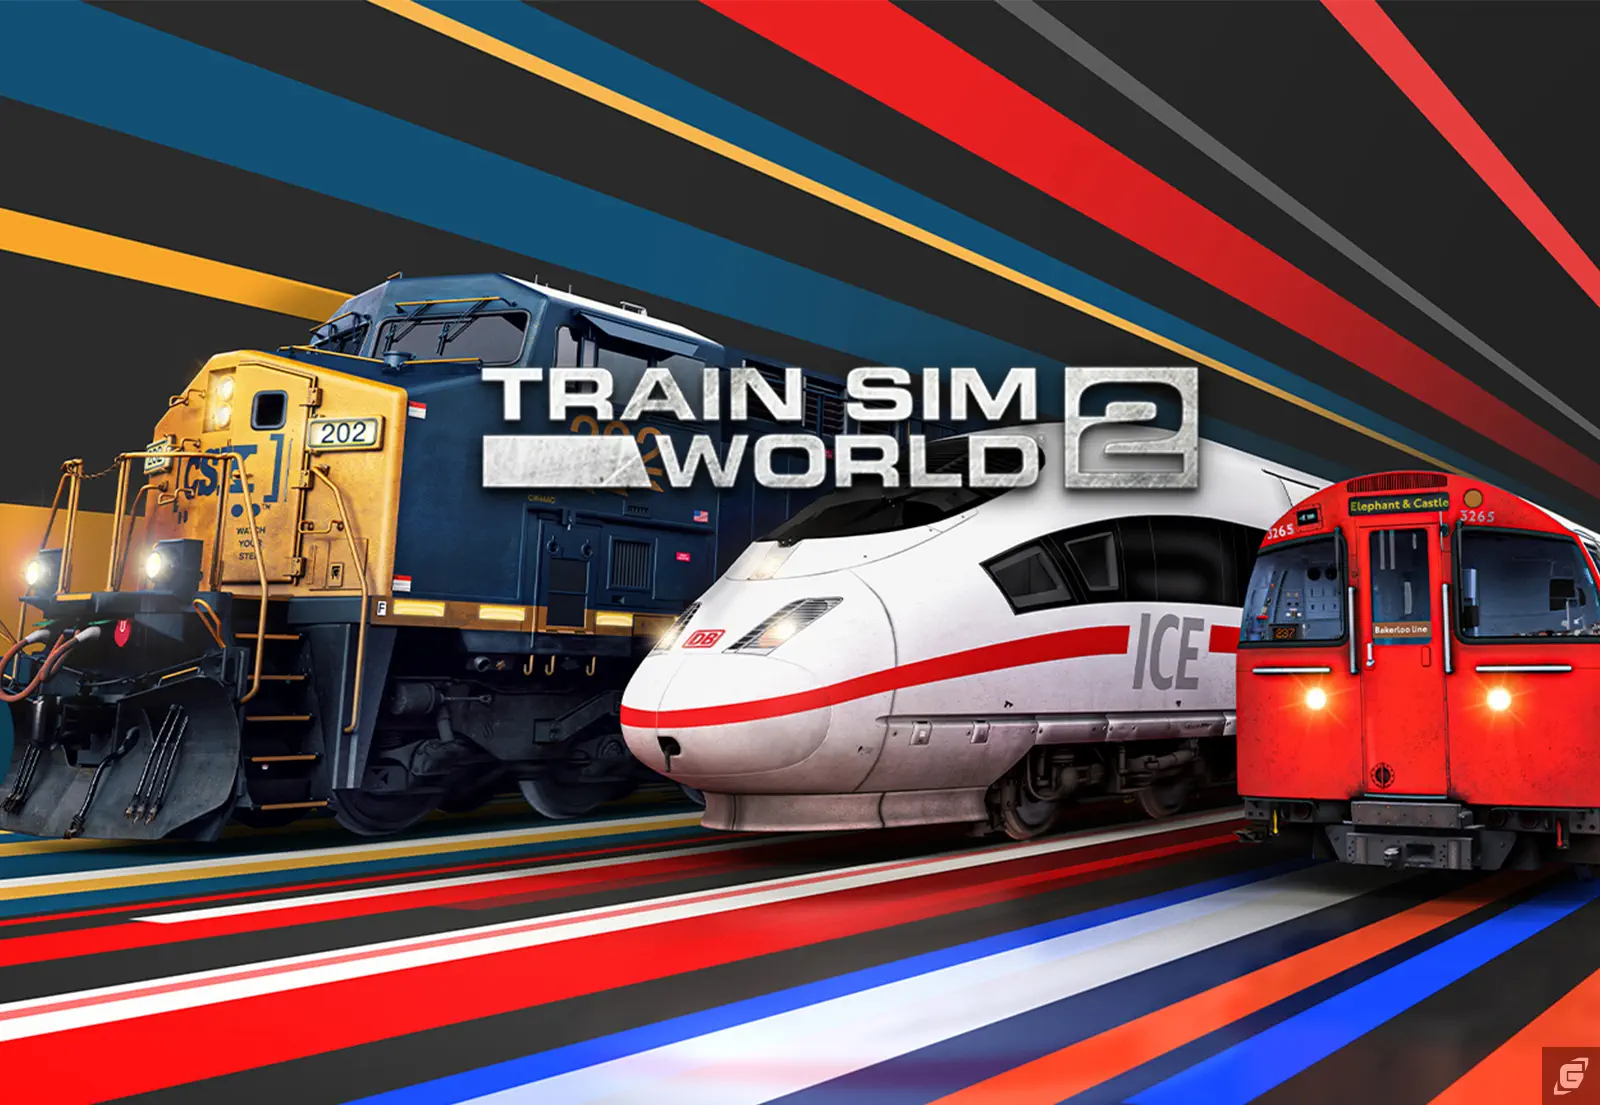 TRAIN SIM WORLD 2 - Unser Review zum neuen Train Simulator!